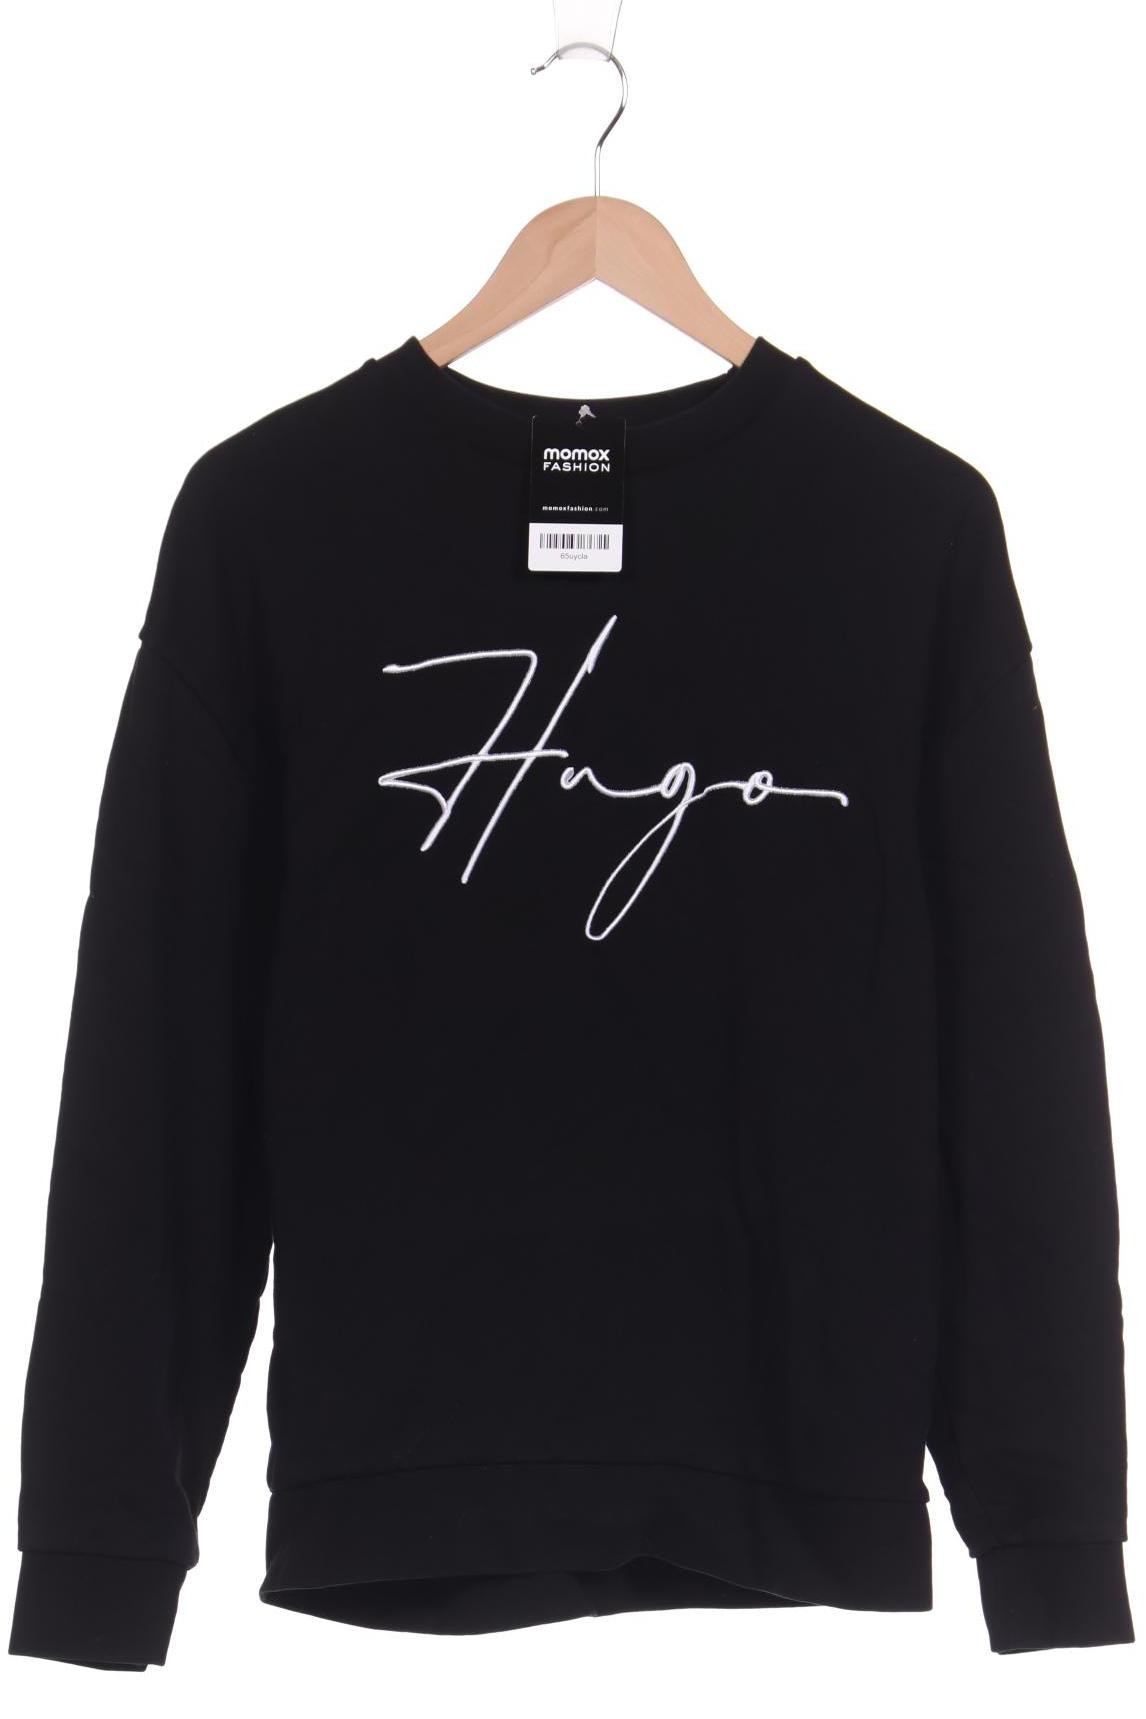 HUGO by Hugo Boss Damen Sweatshirt, schwarz von HUGO by Hugo Boss